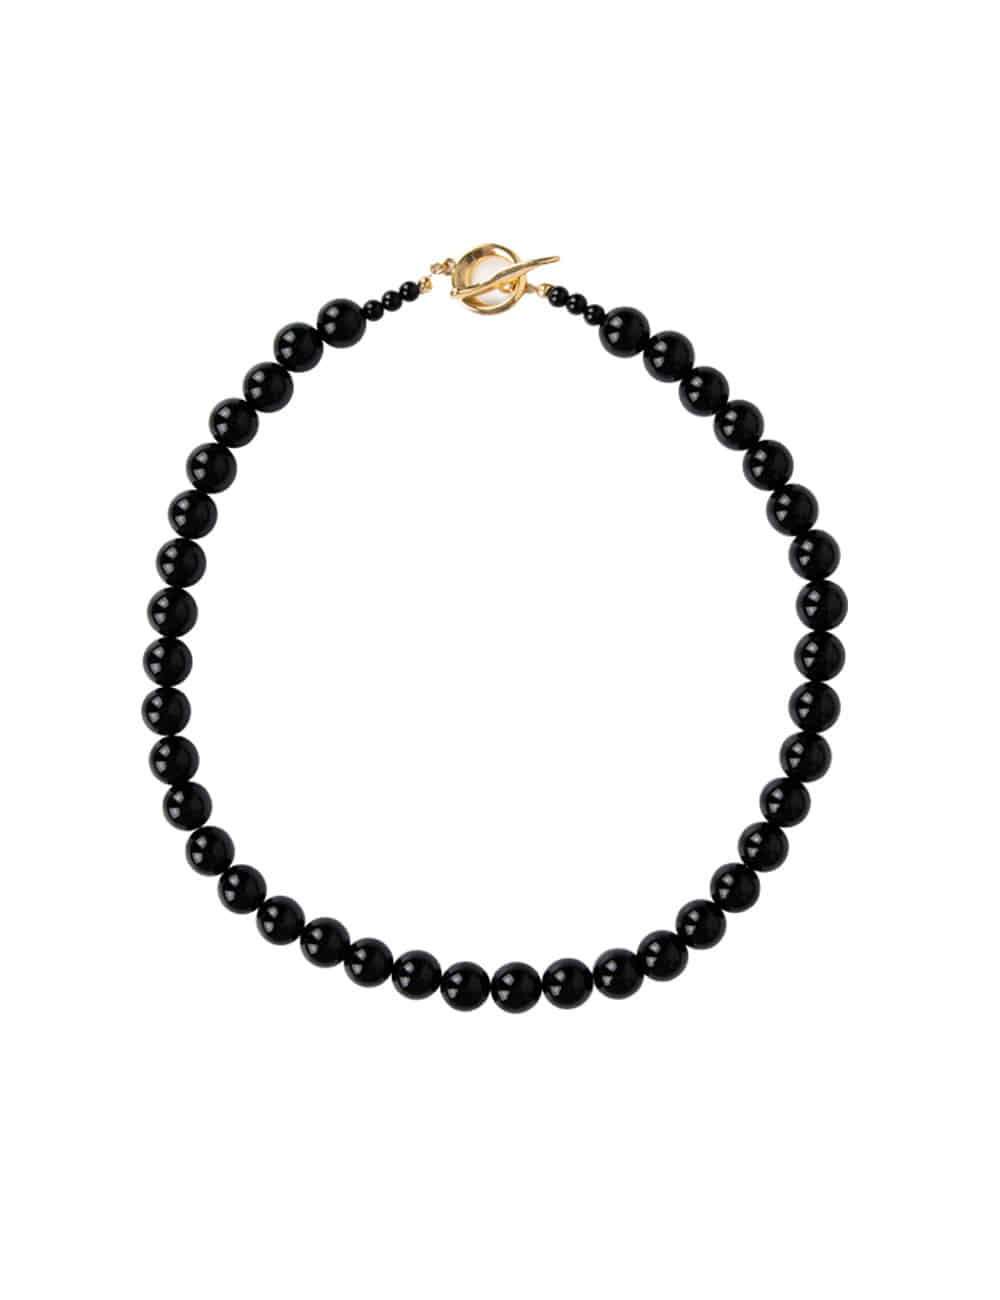 Orb Gemstone Necklace